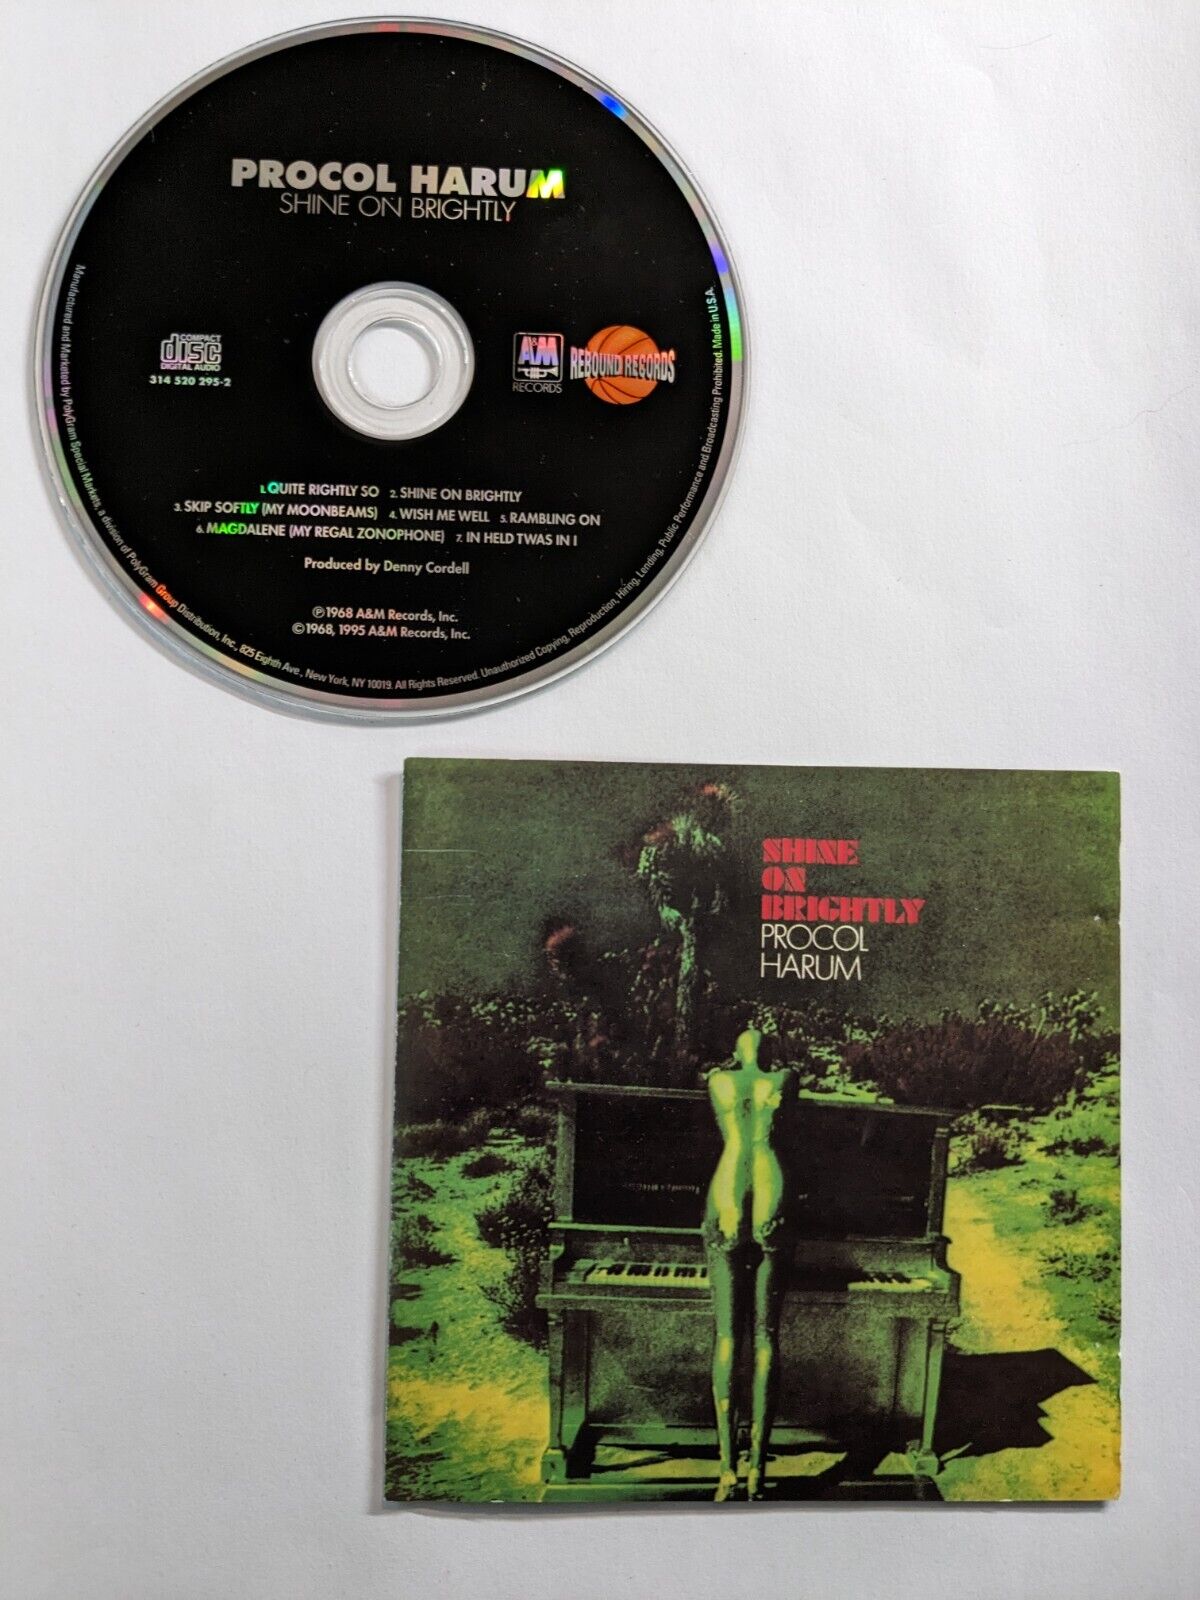 Procol Harum/Robin Trower CD LOT (Shine on Brightly, Classics, Bridge of Sighs) 